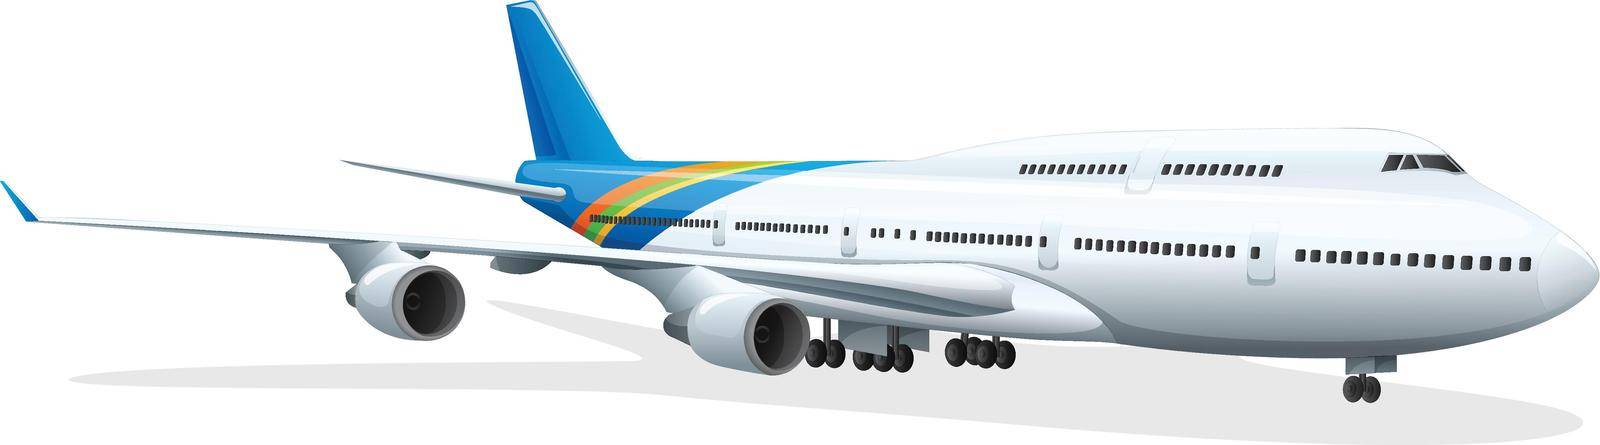 Illustration of a passenger jet side view